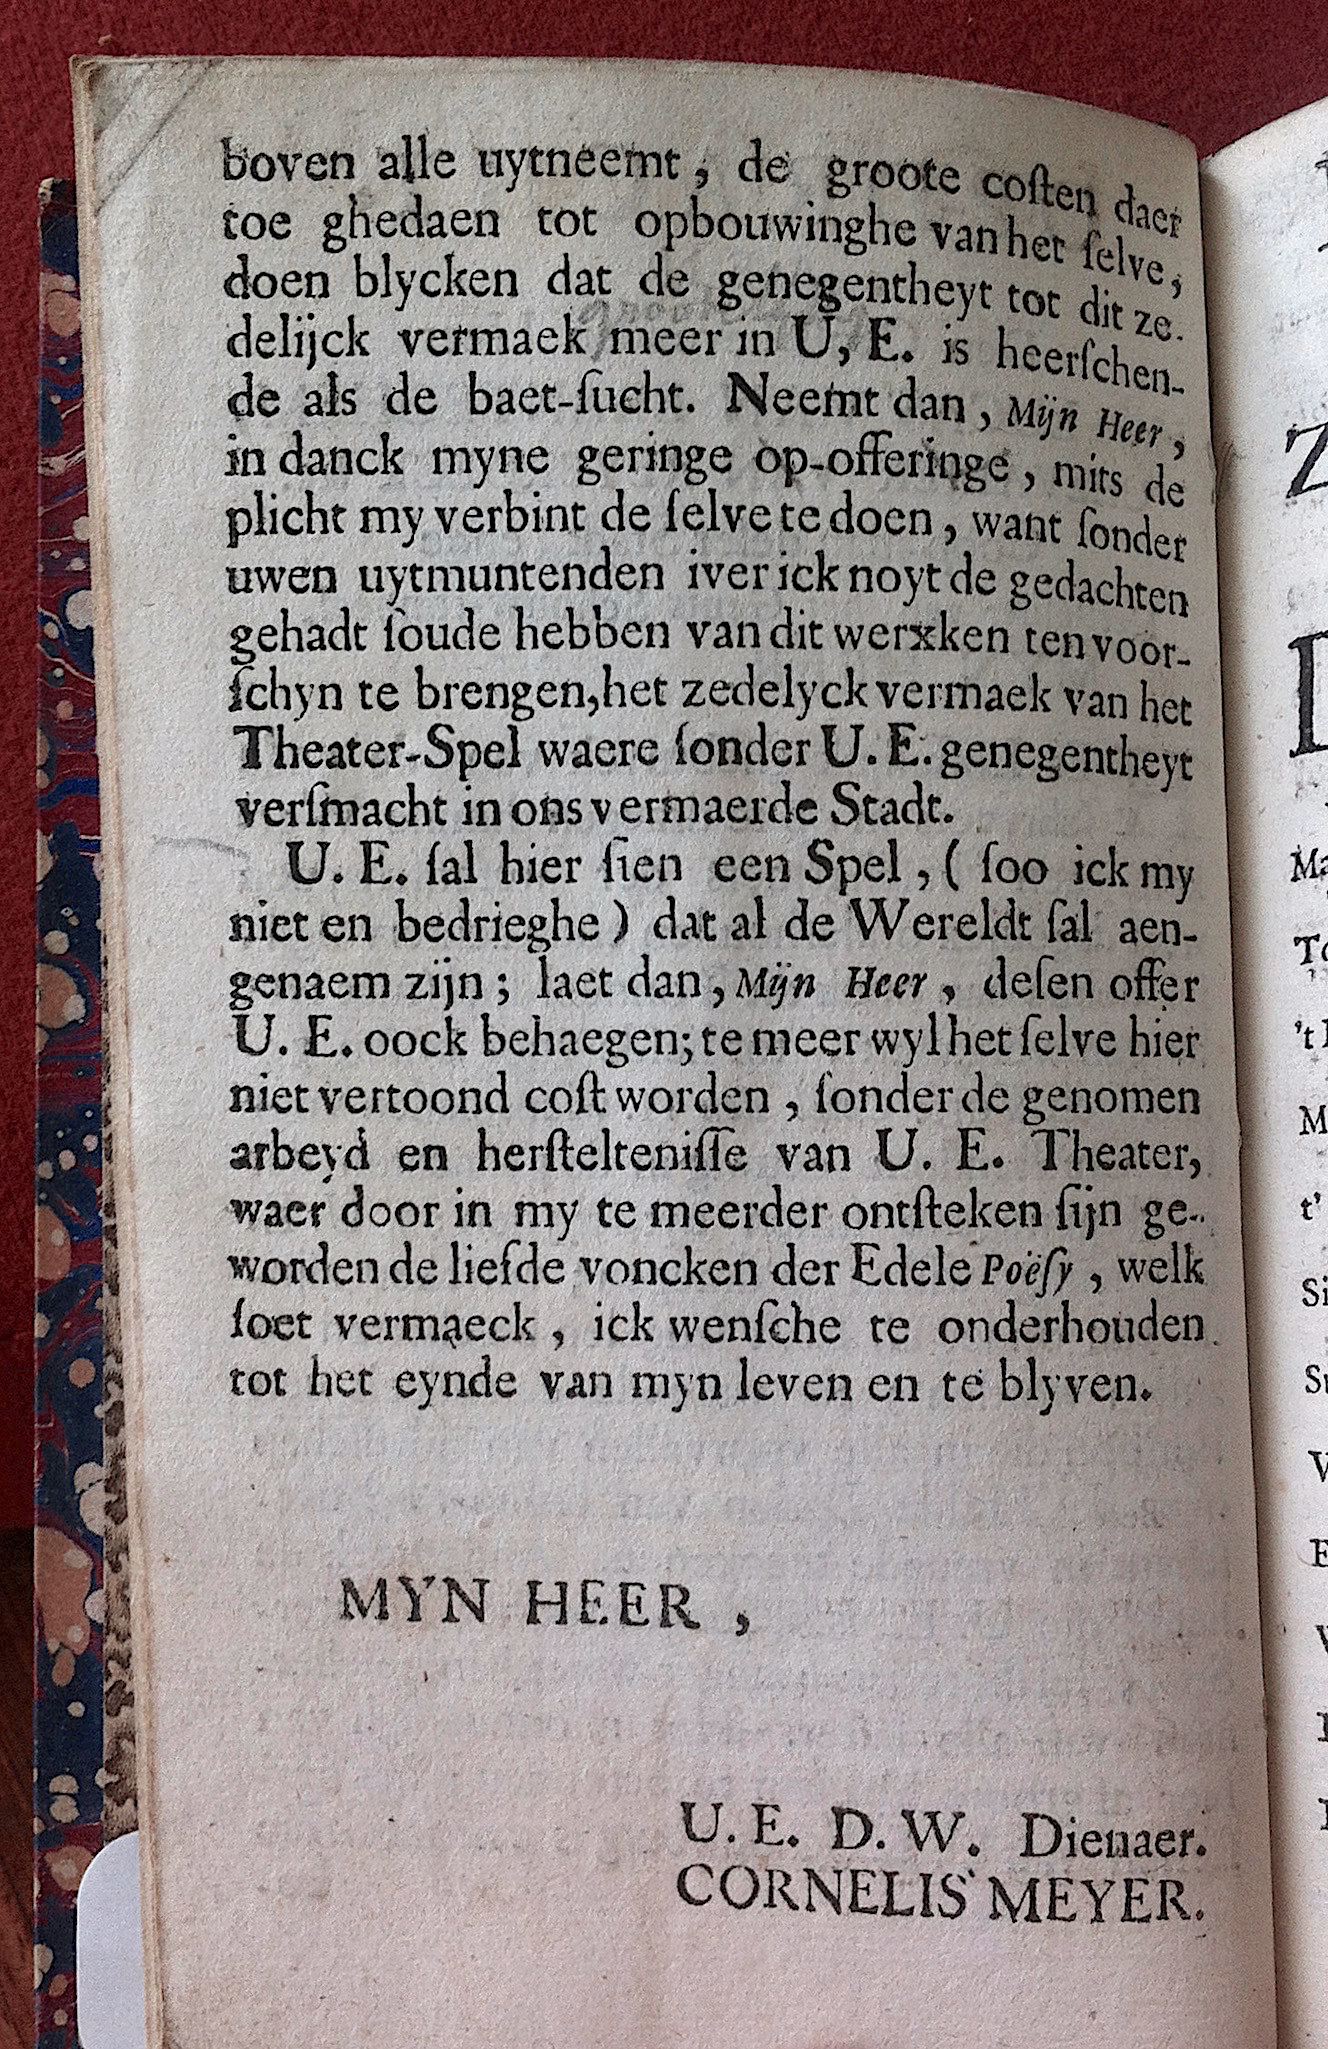 MeyerCarelSultan1717a04